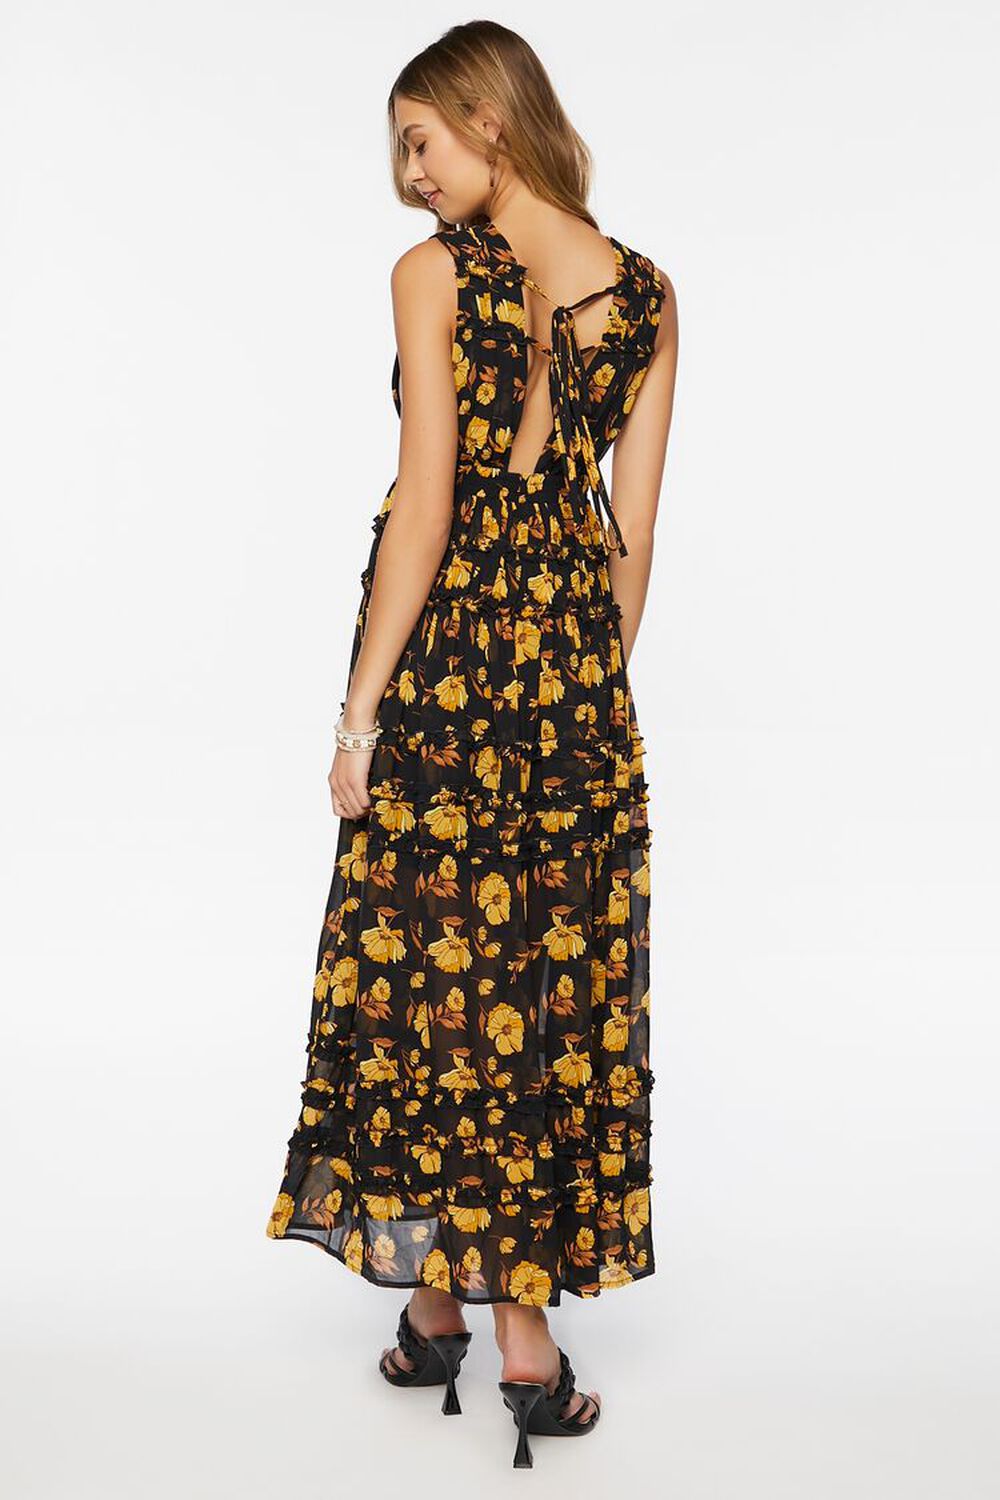 BLACK/MULTI Floral Print Plunging Maxi Dress, image 3